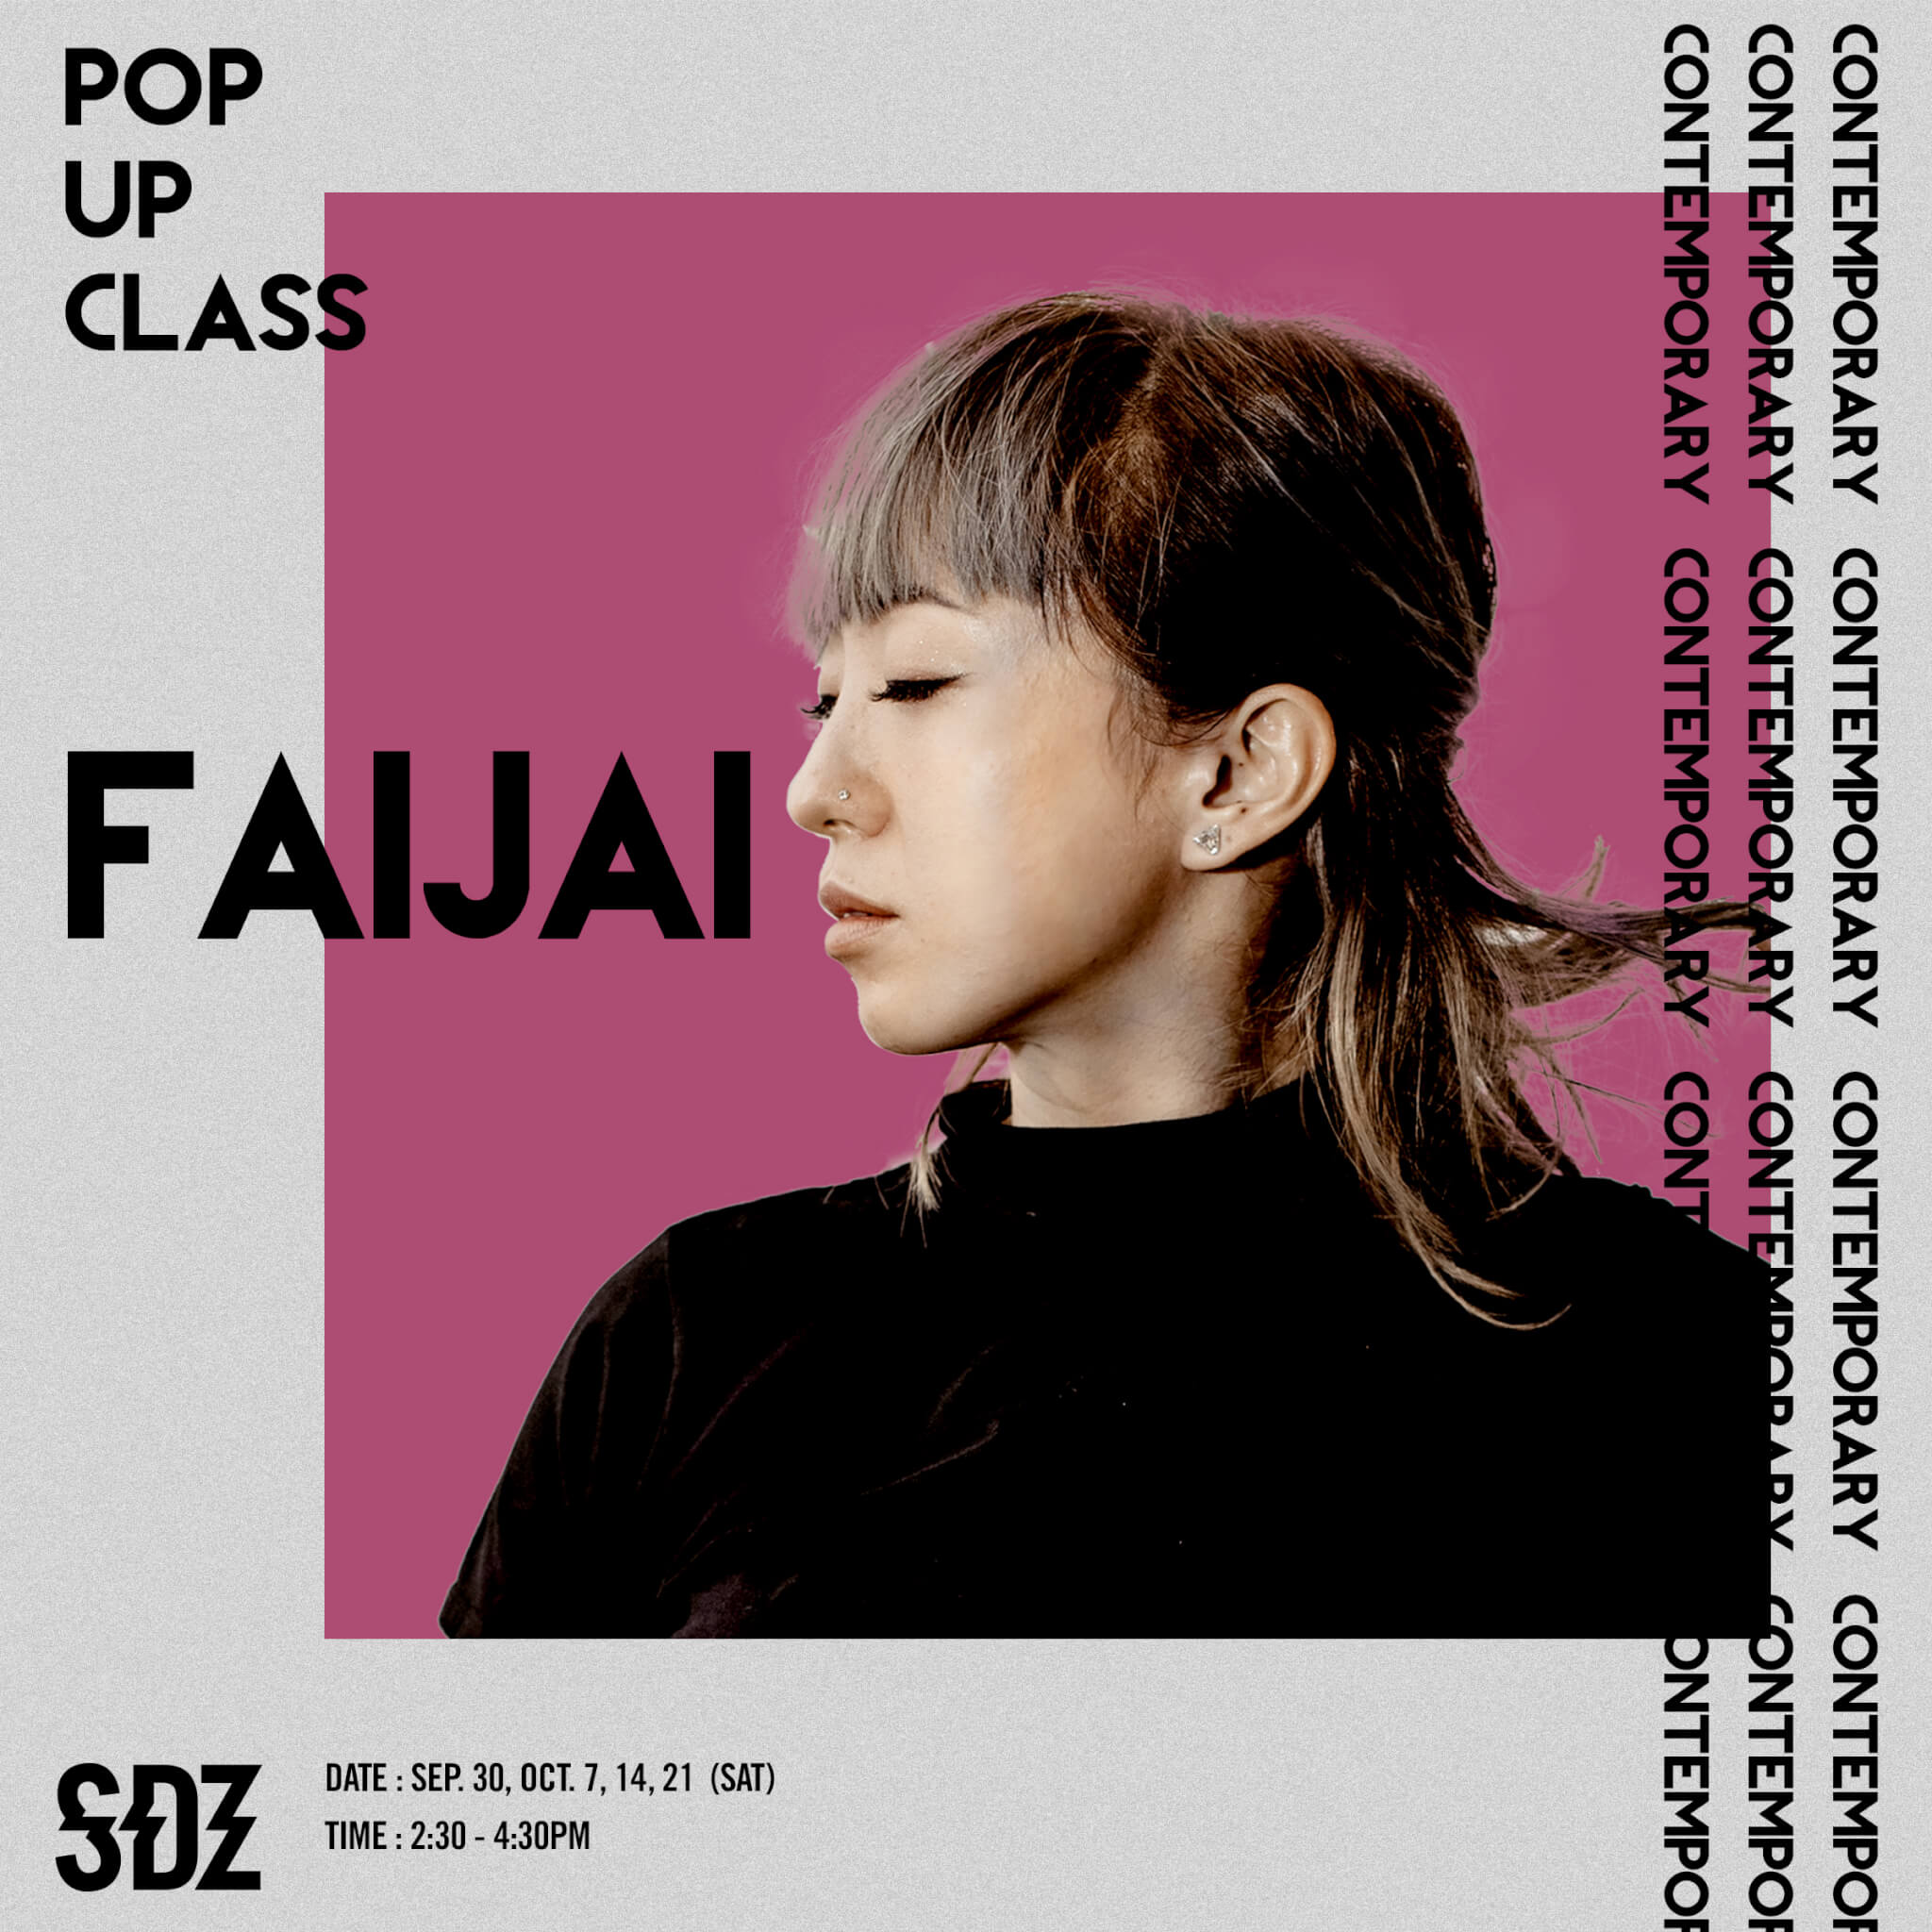 Pop Up Class - Contemporary - Faijai